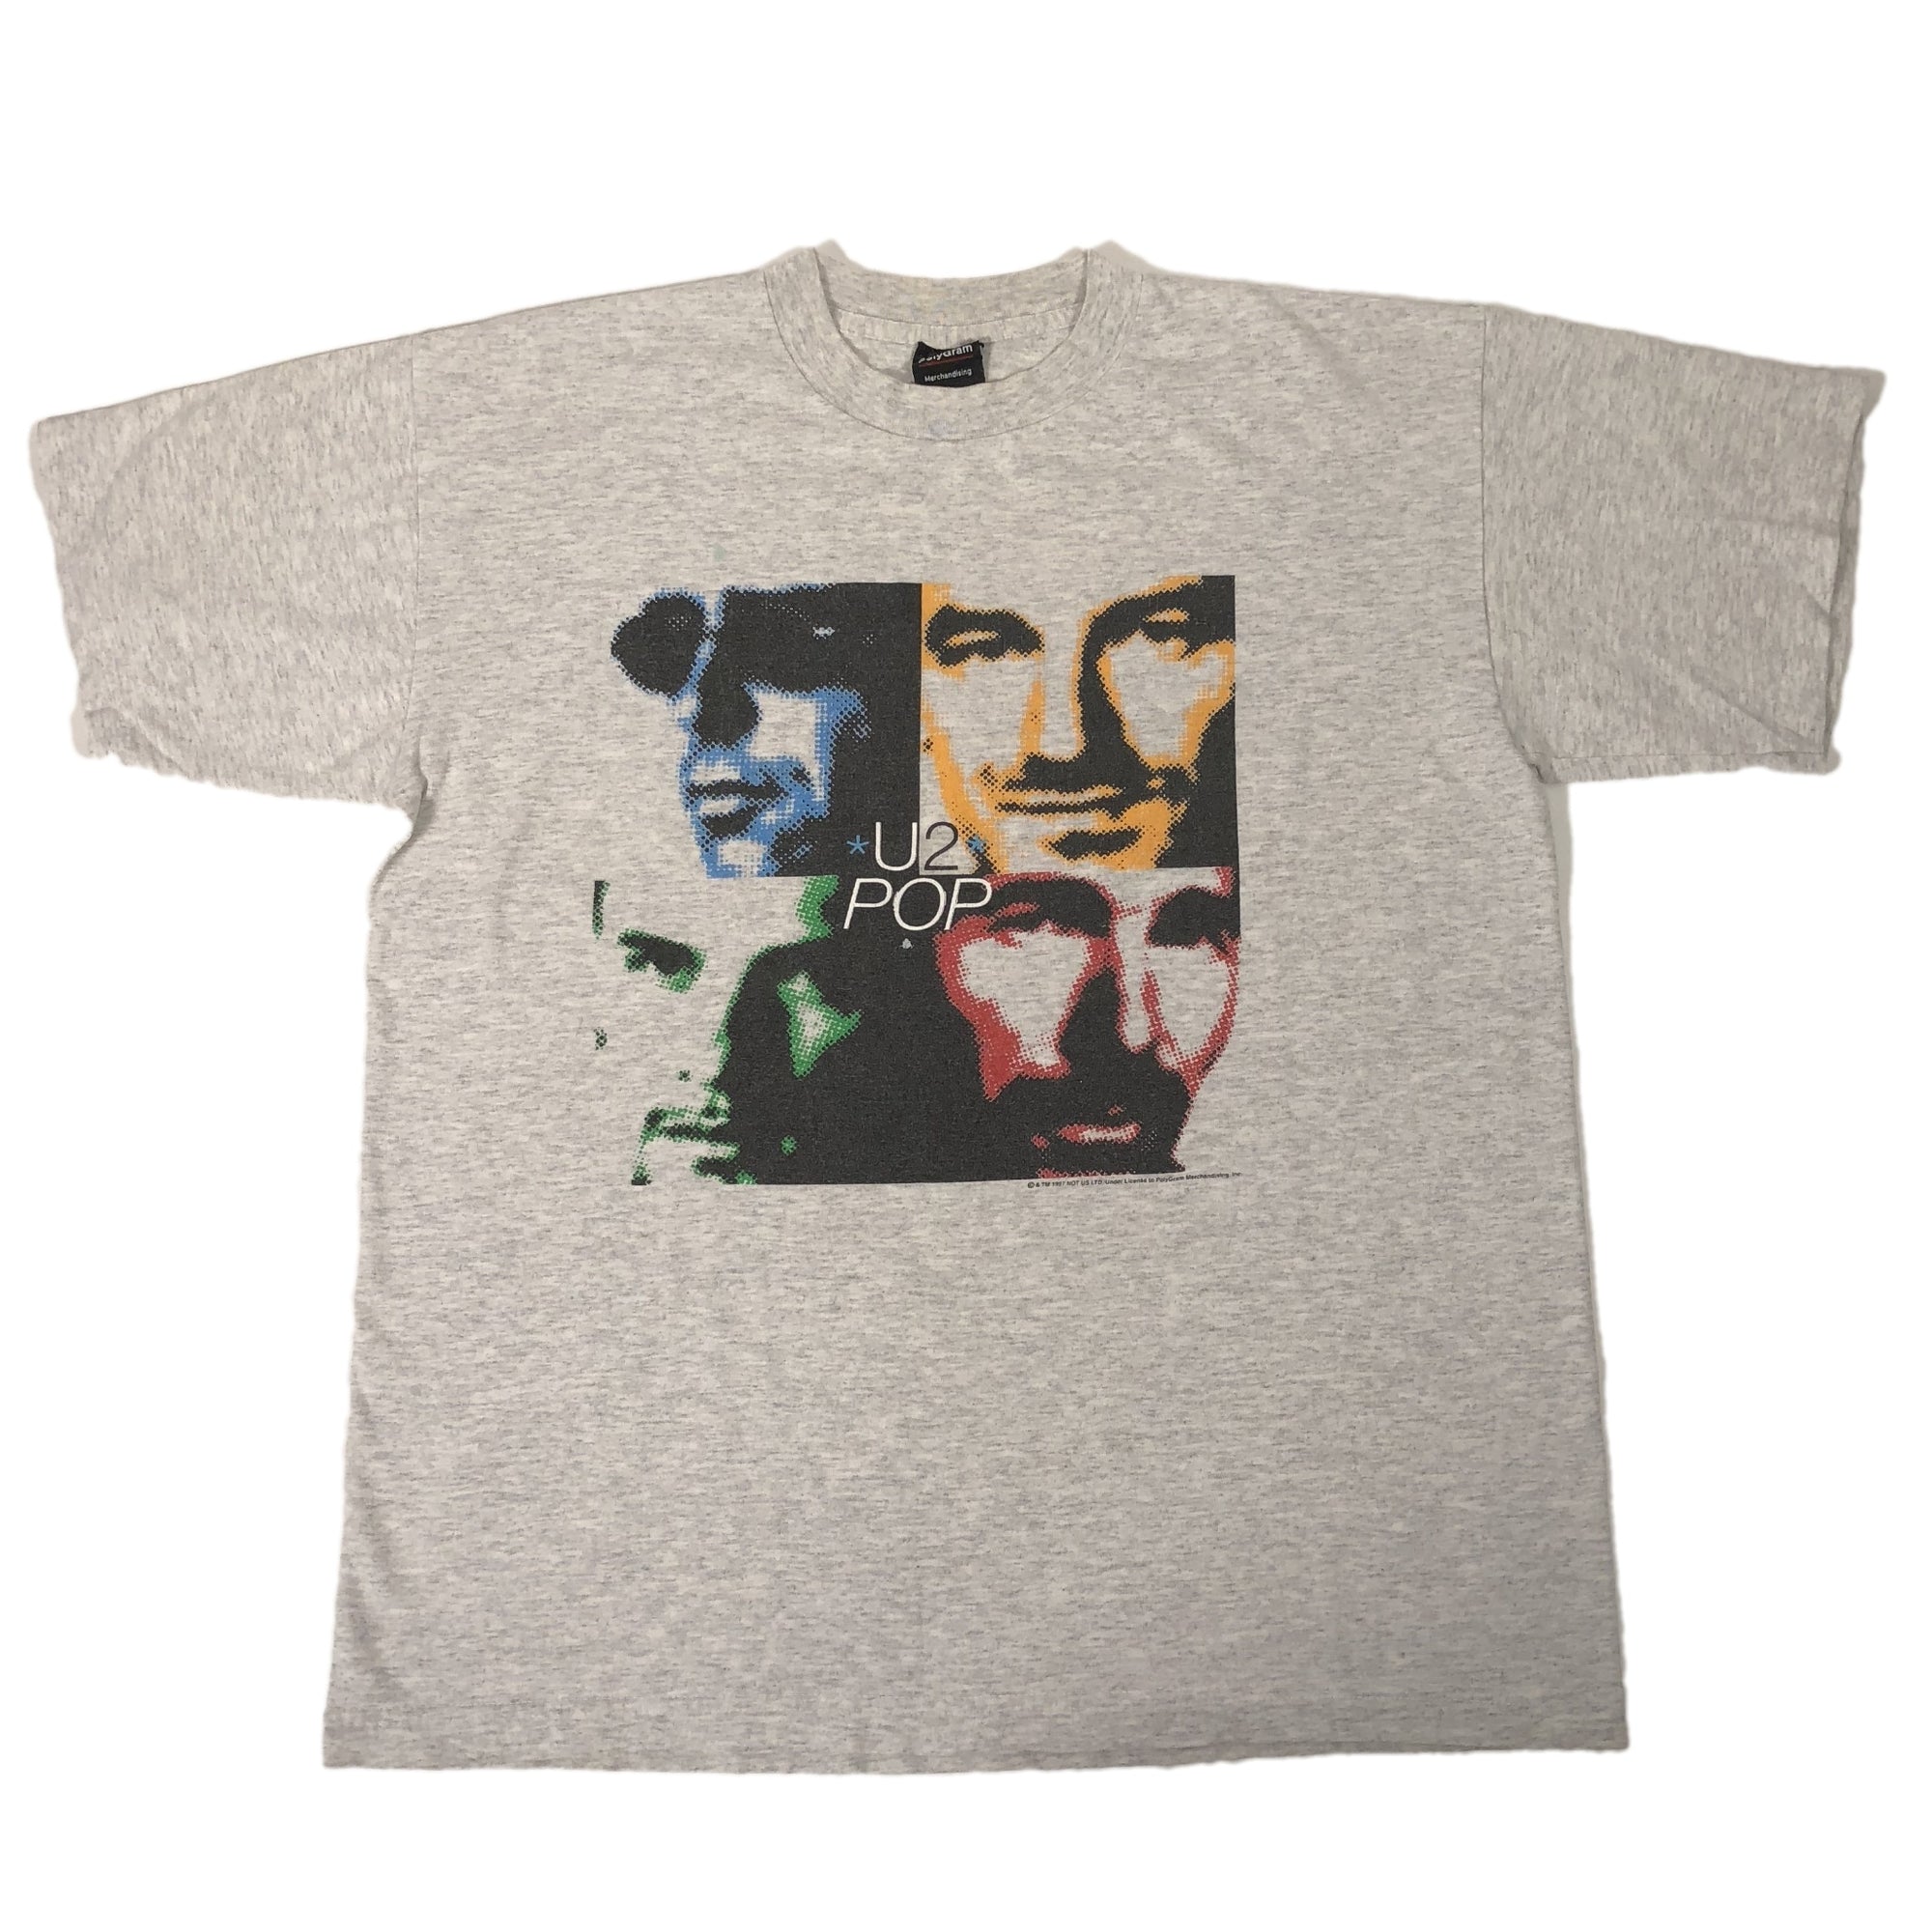 Vintage U2 "Pop" T-Shirt - jointcustodydc